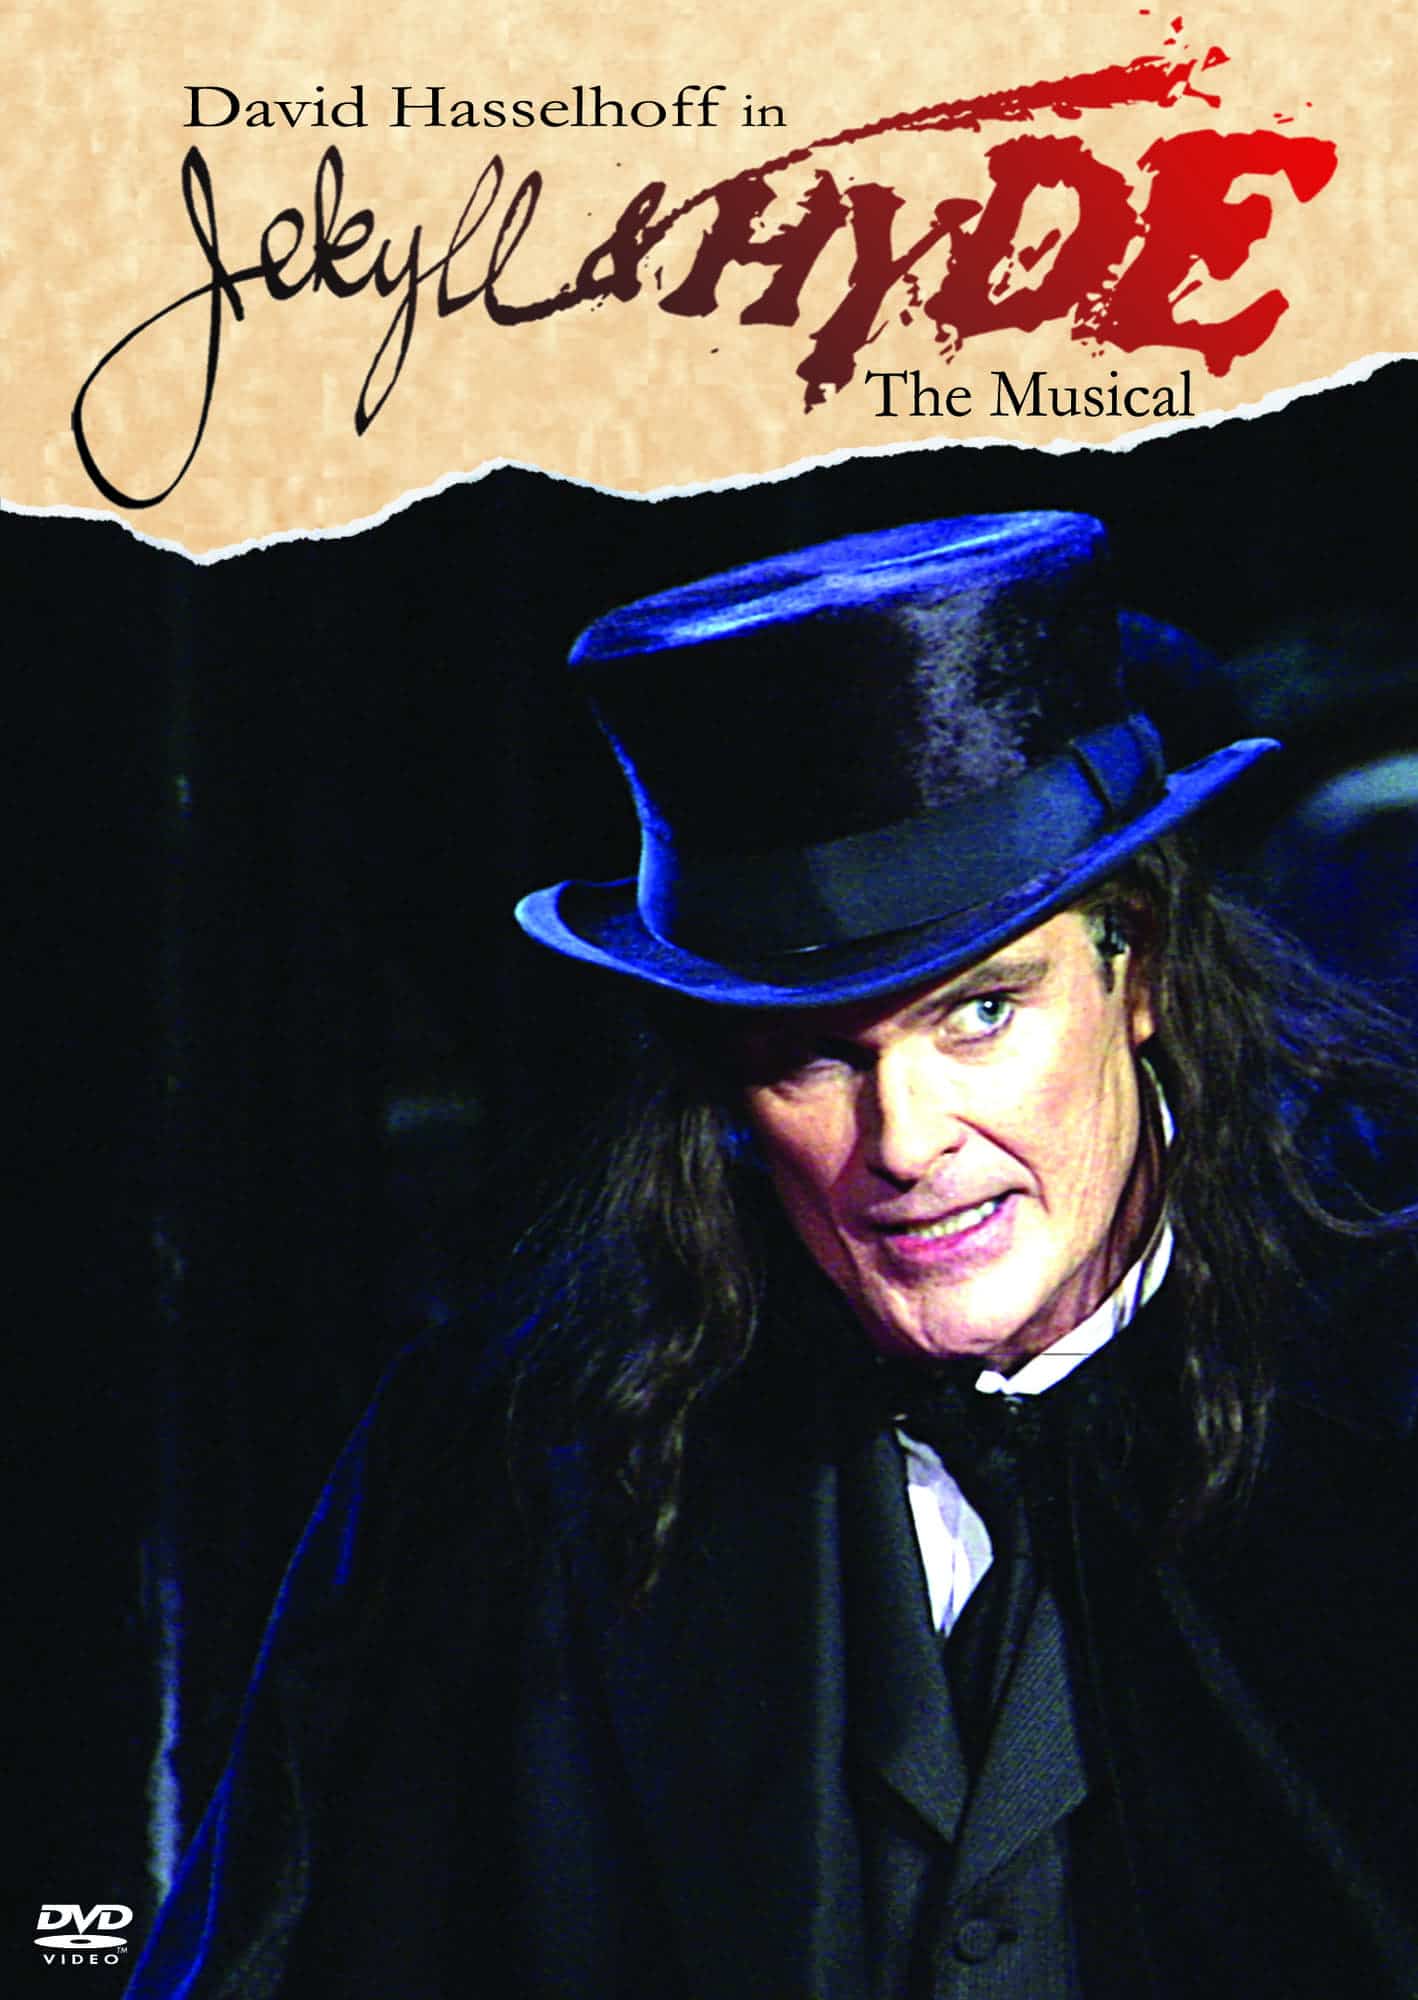 Plakat von "Jekyll & Hyde: The Musical"